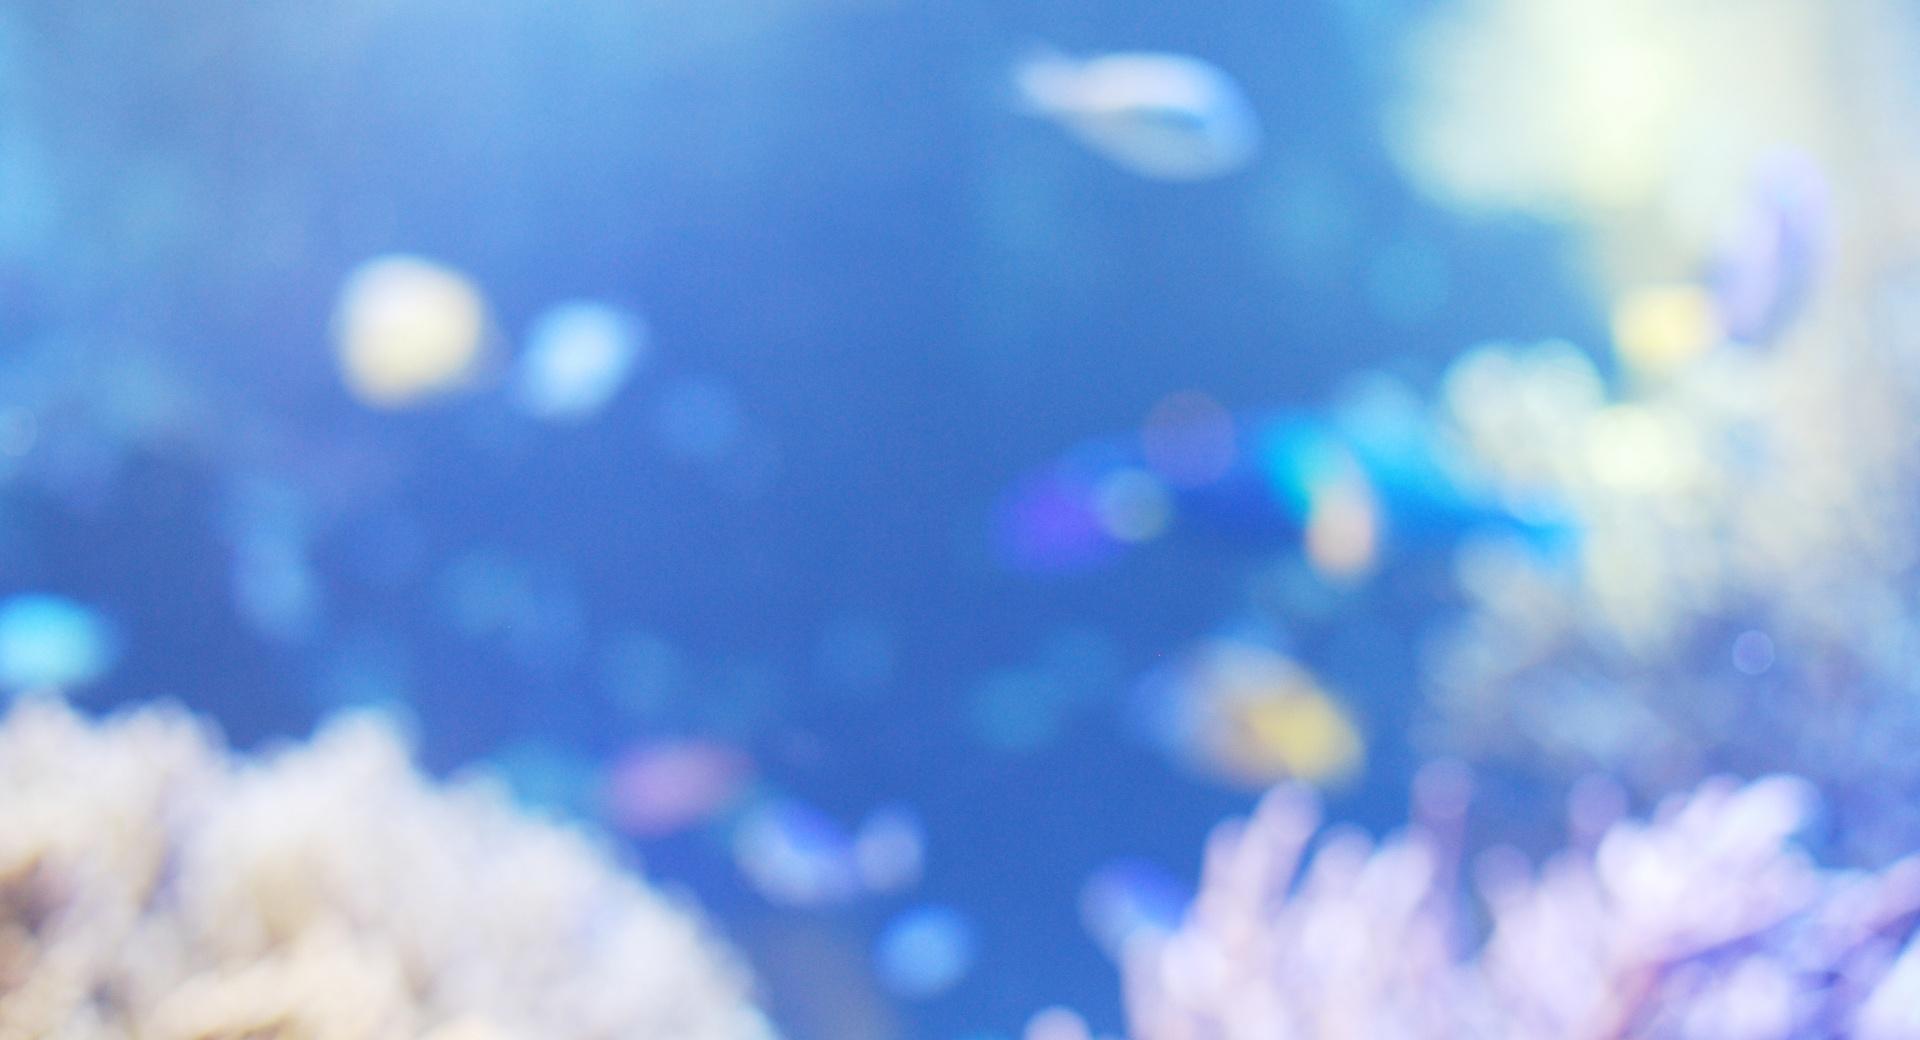 Fish Aquarium at 640 x 960 iPhone 4 size wallpapers HD quality